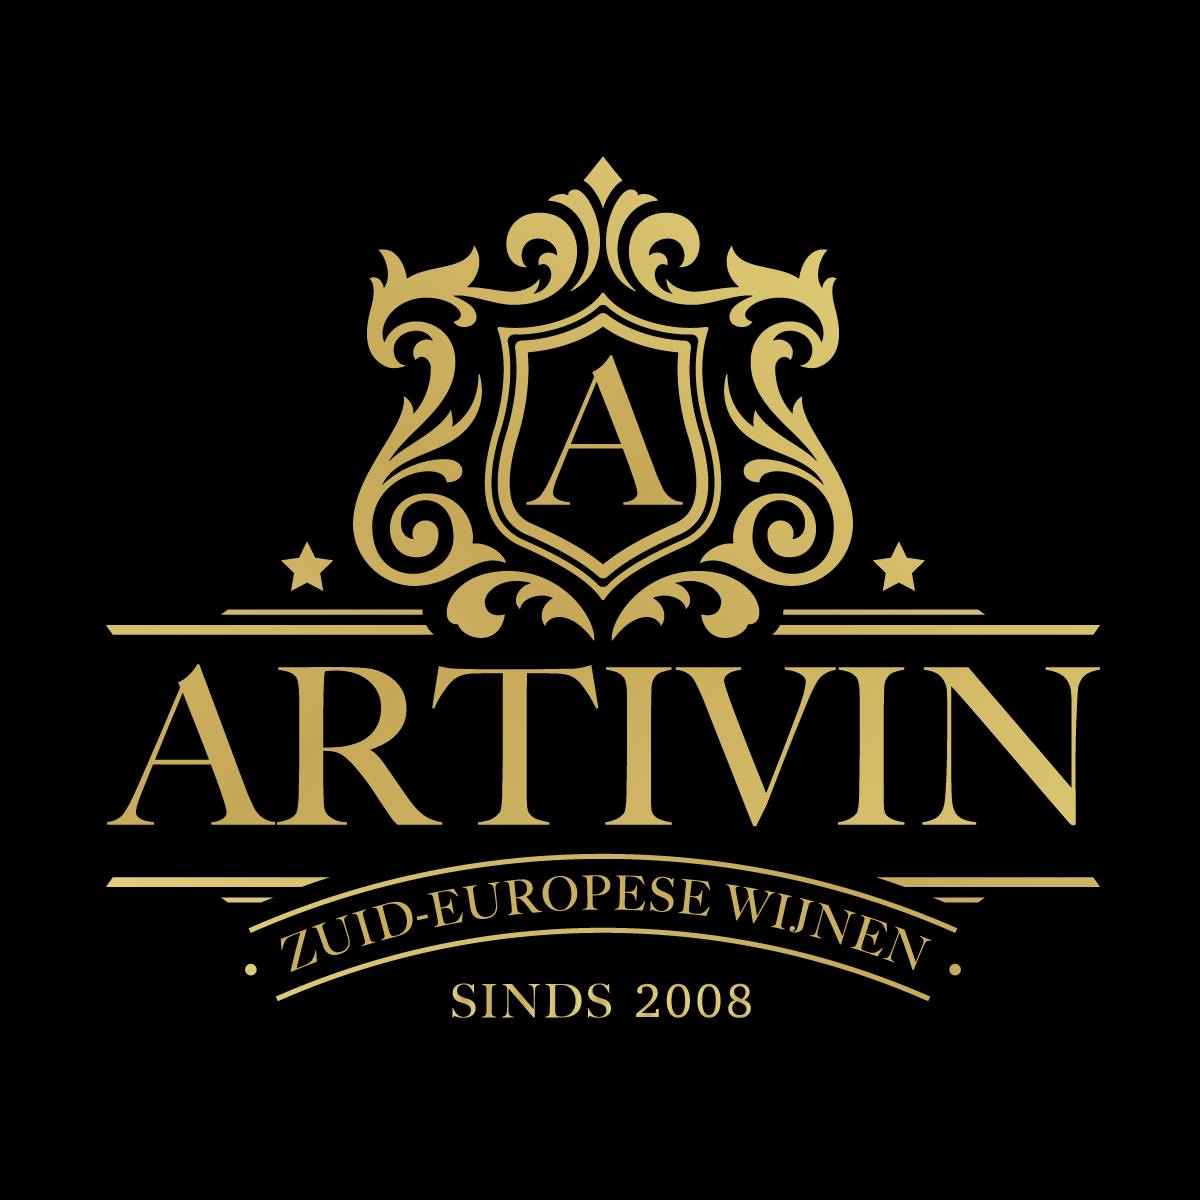 Wijnhandel Artivin Zuid-Europese wijnen